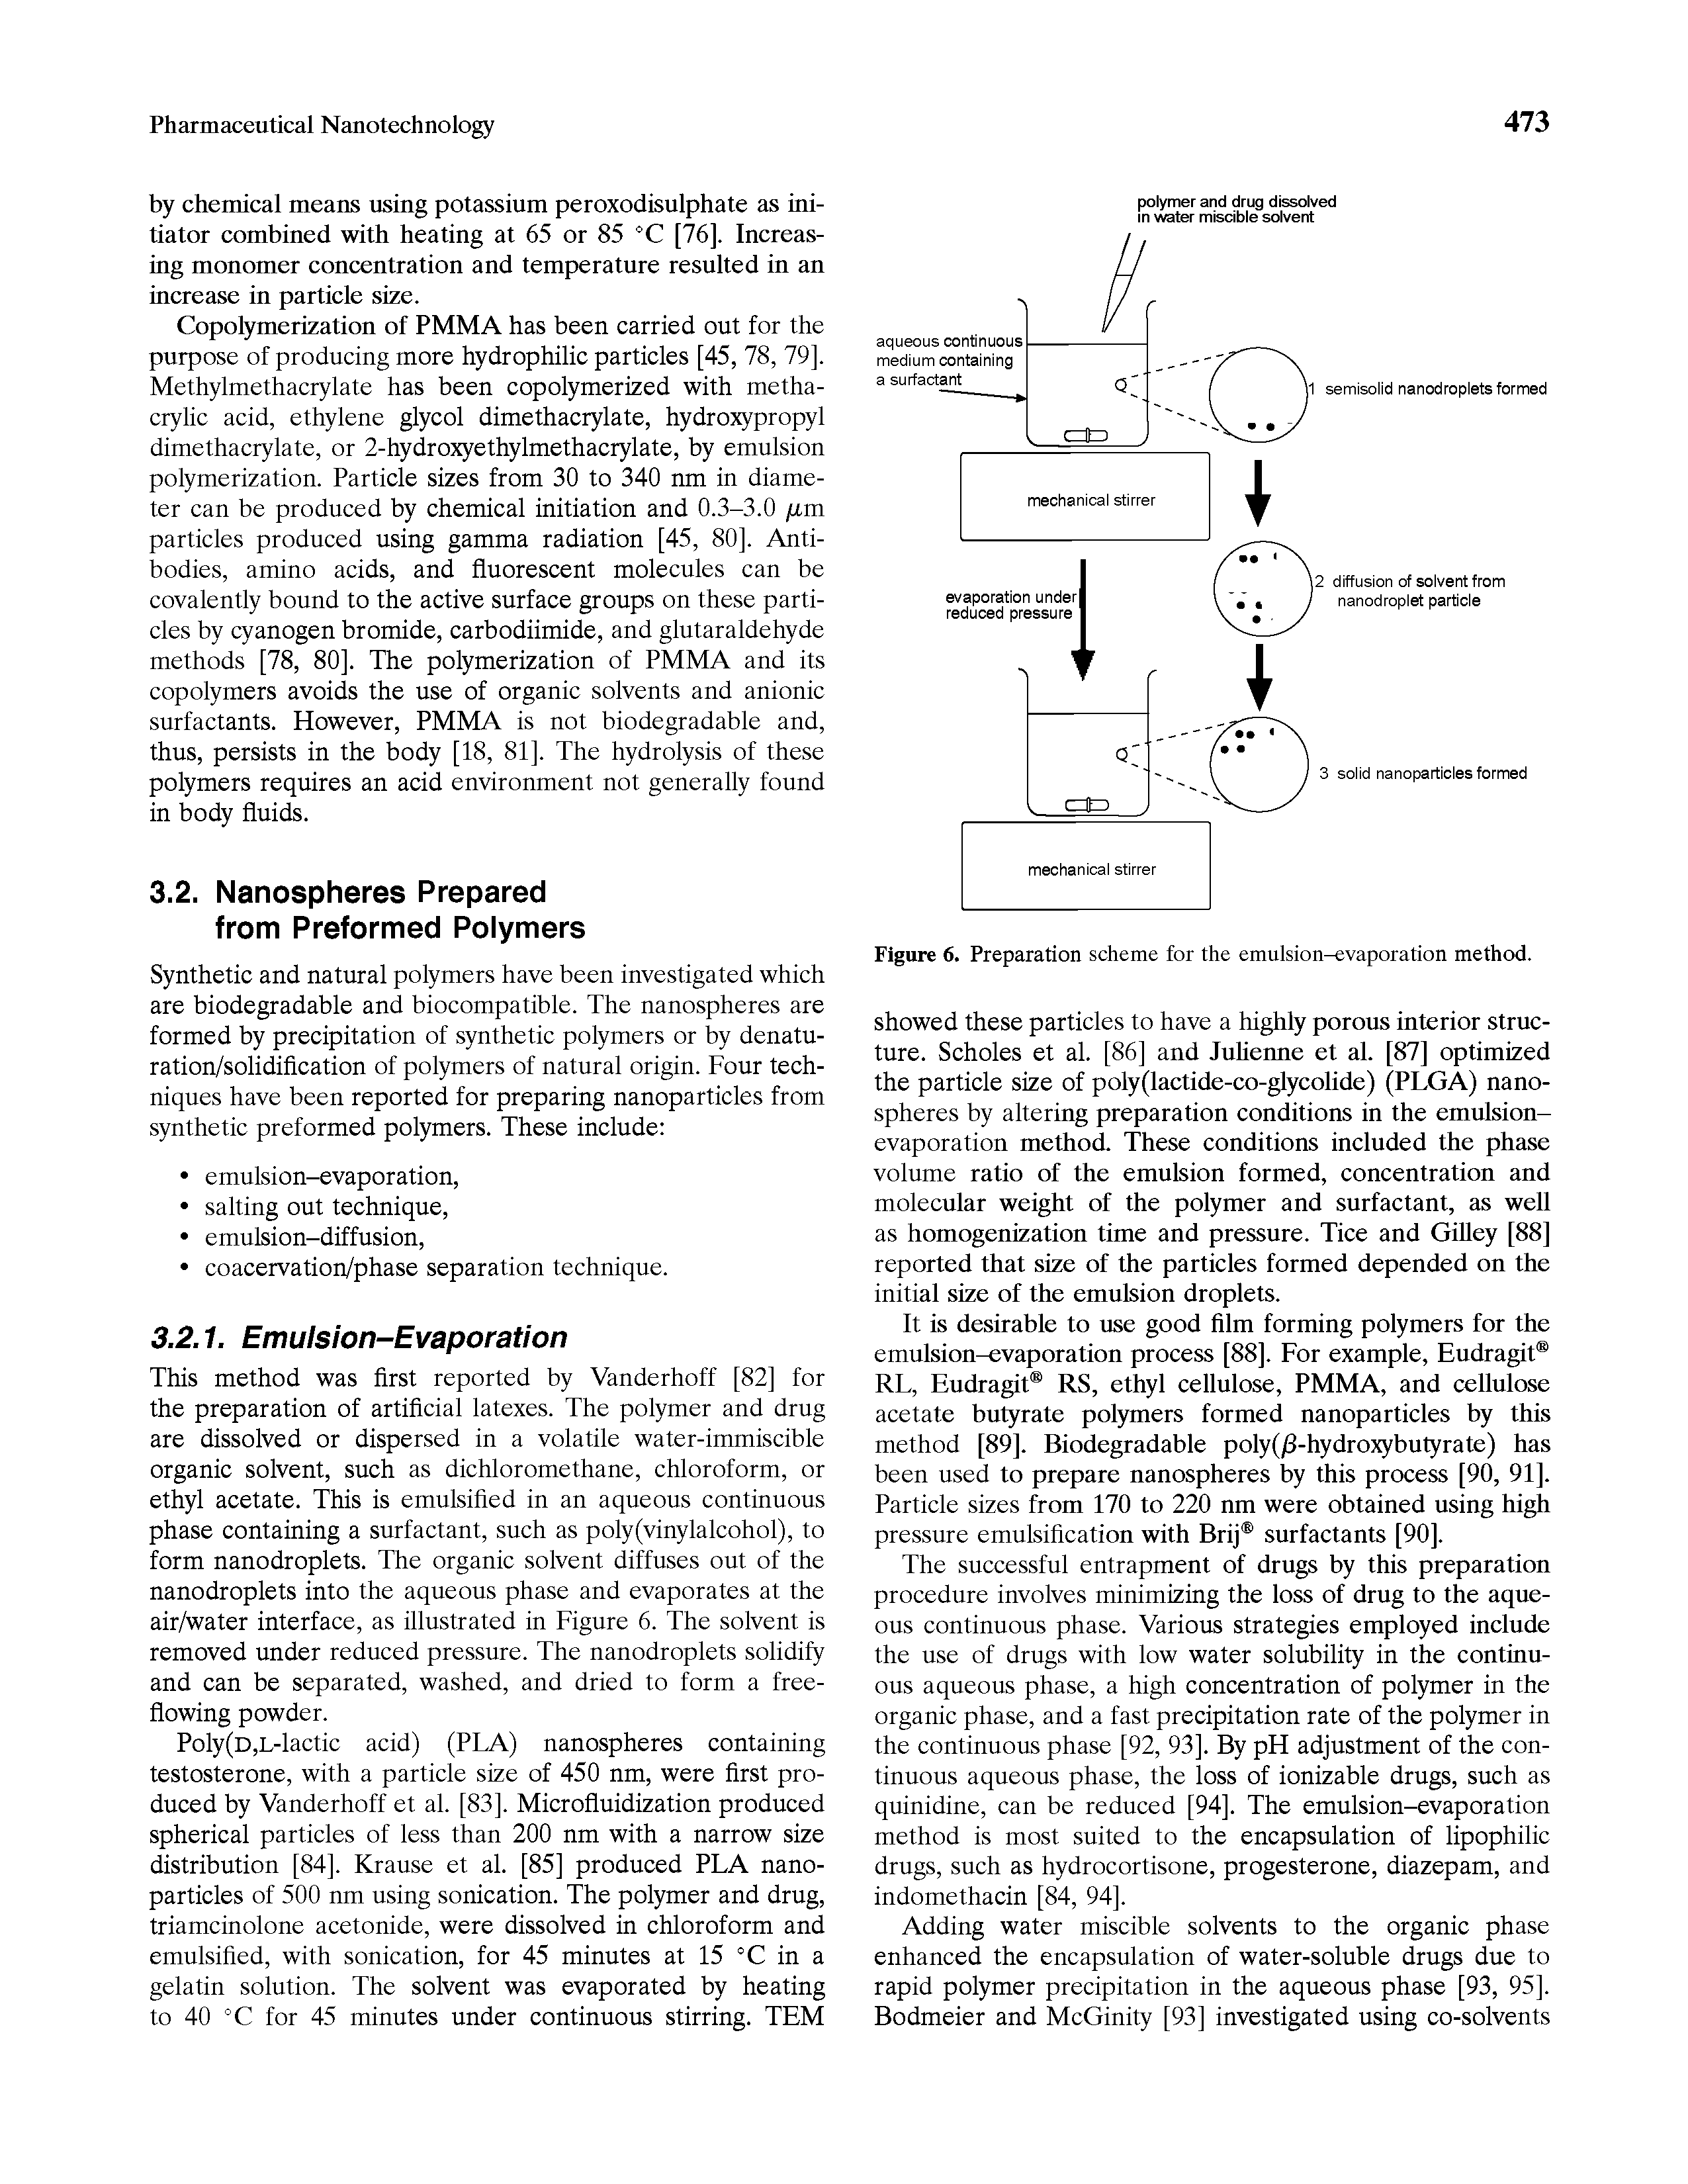 Figure 6. Preparation scheme for the emulsion-evaporation method.